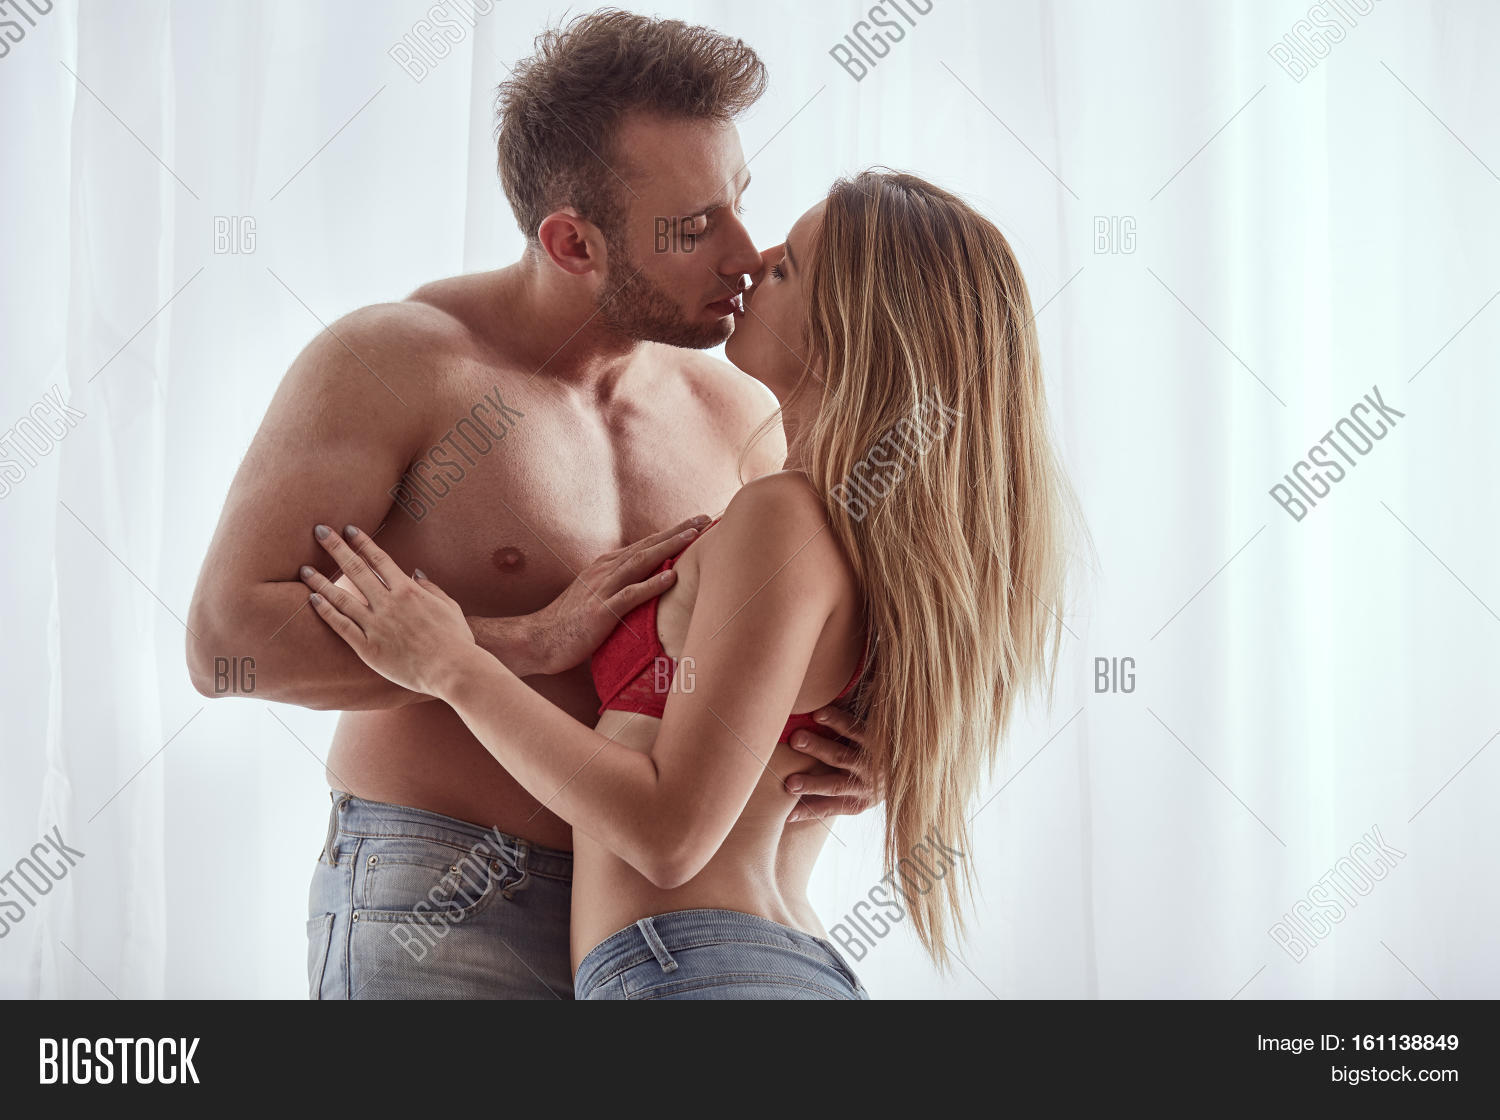 amanda janson recommends hot women kissing men pic